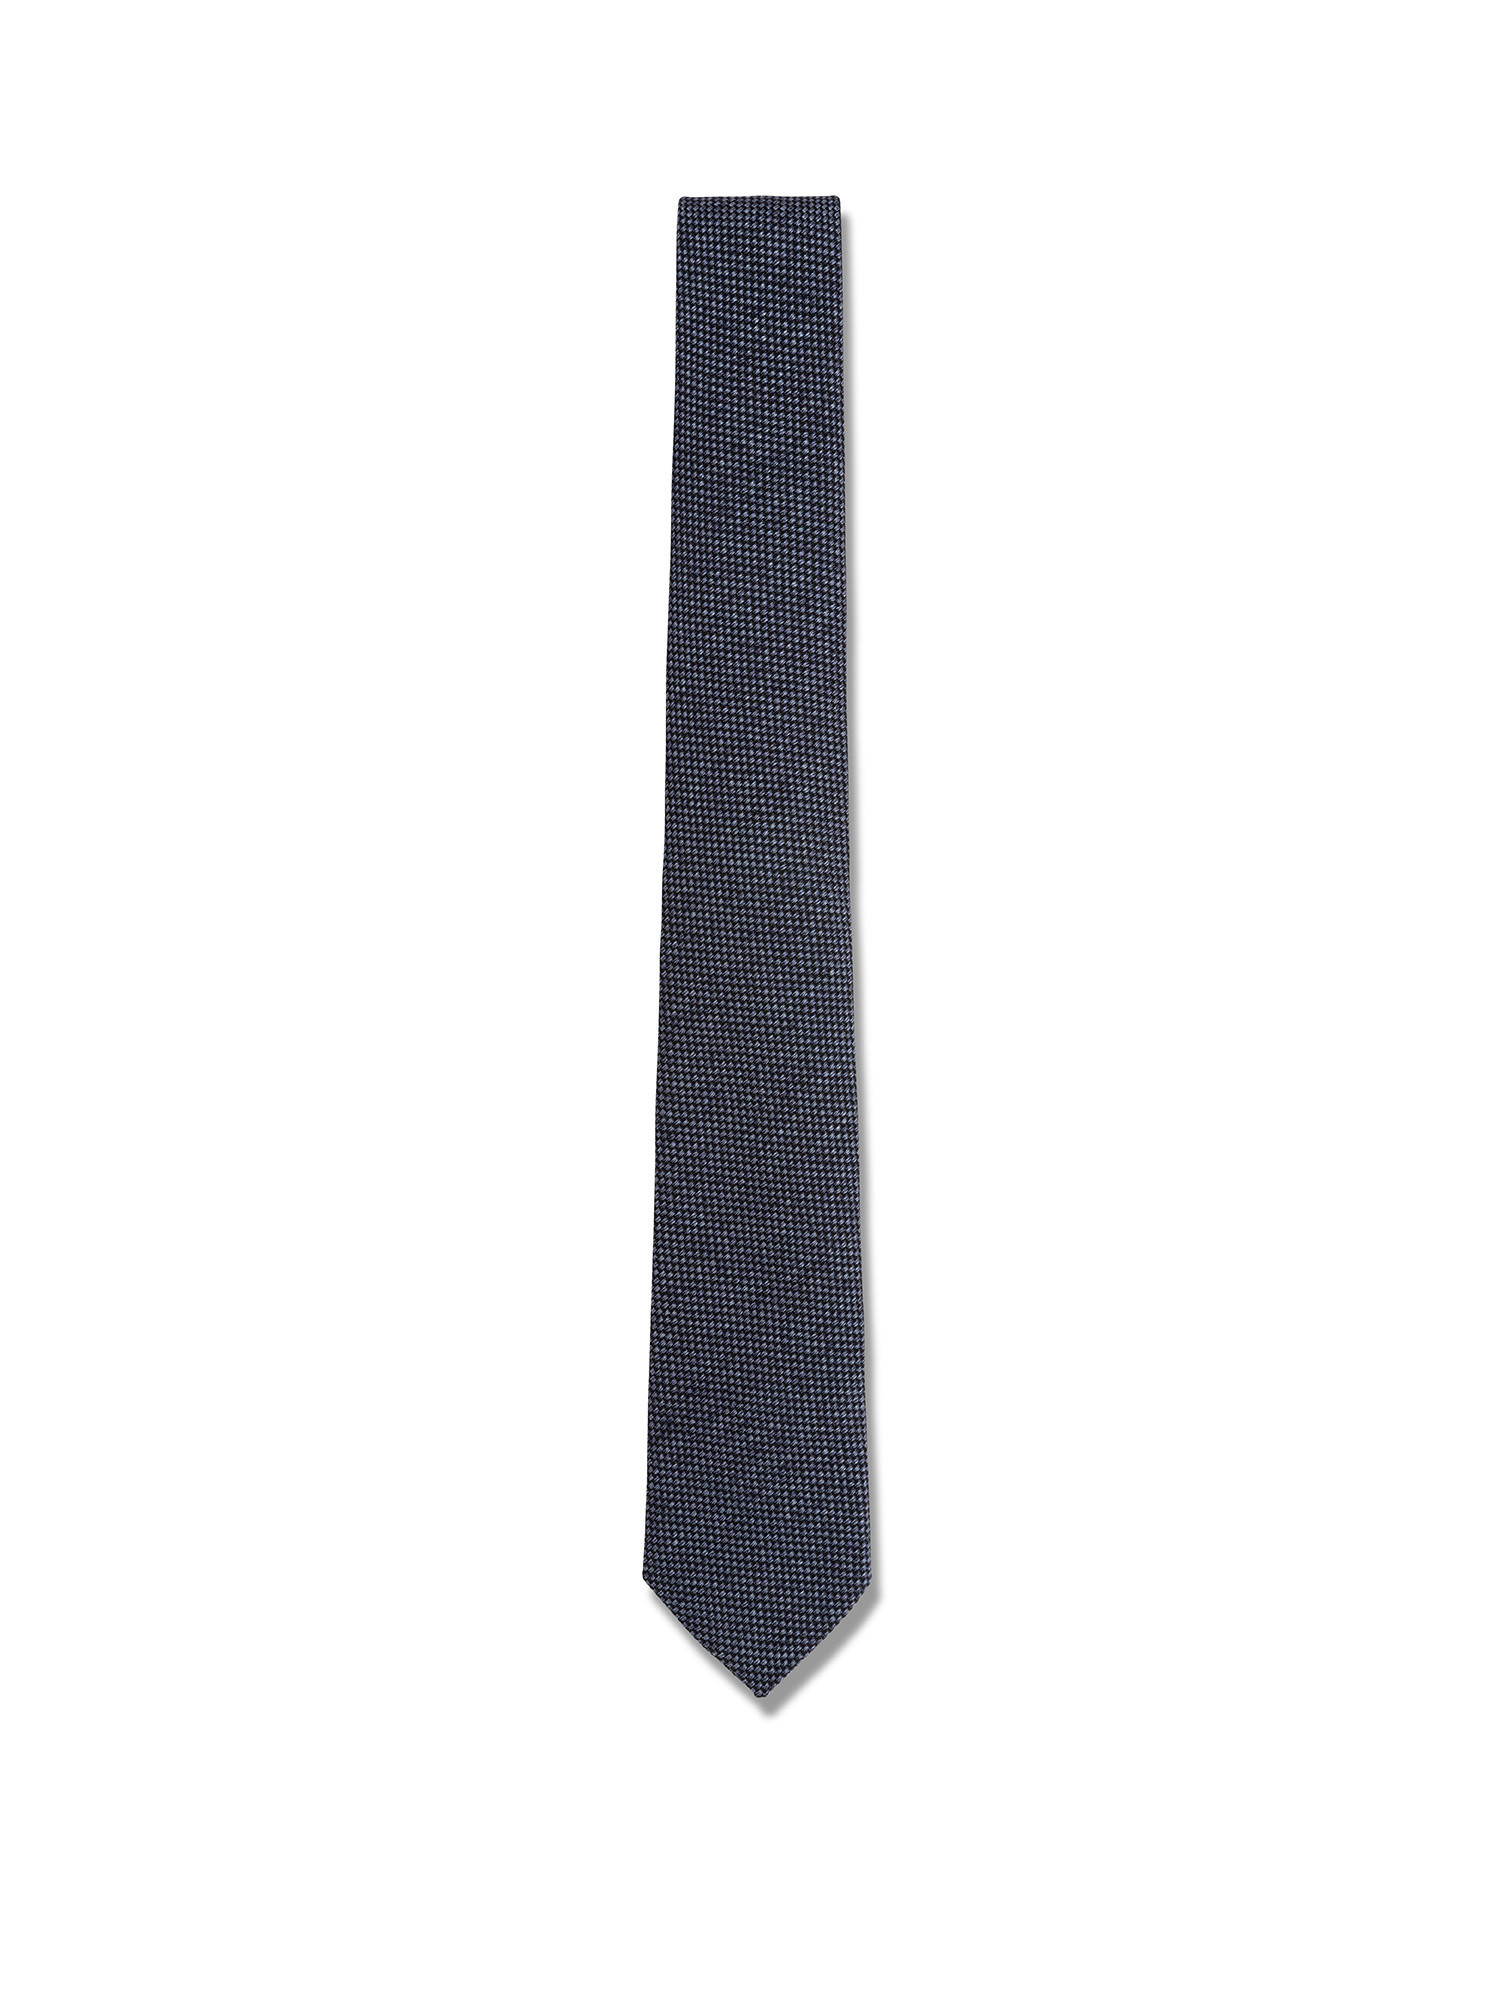 Luca D'Altieri - Classic patterned silk tie, Light Blue, large image number 1